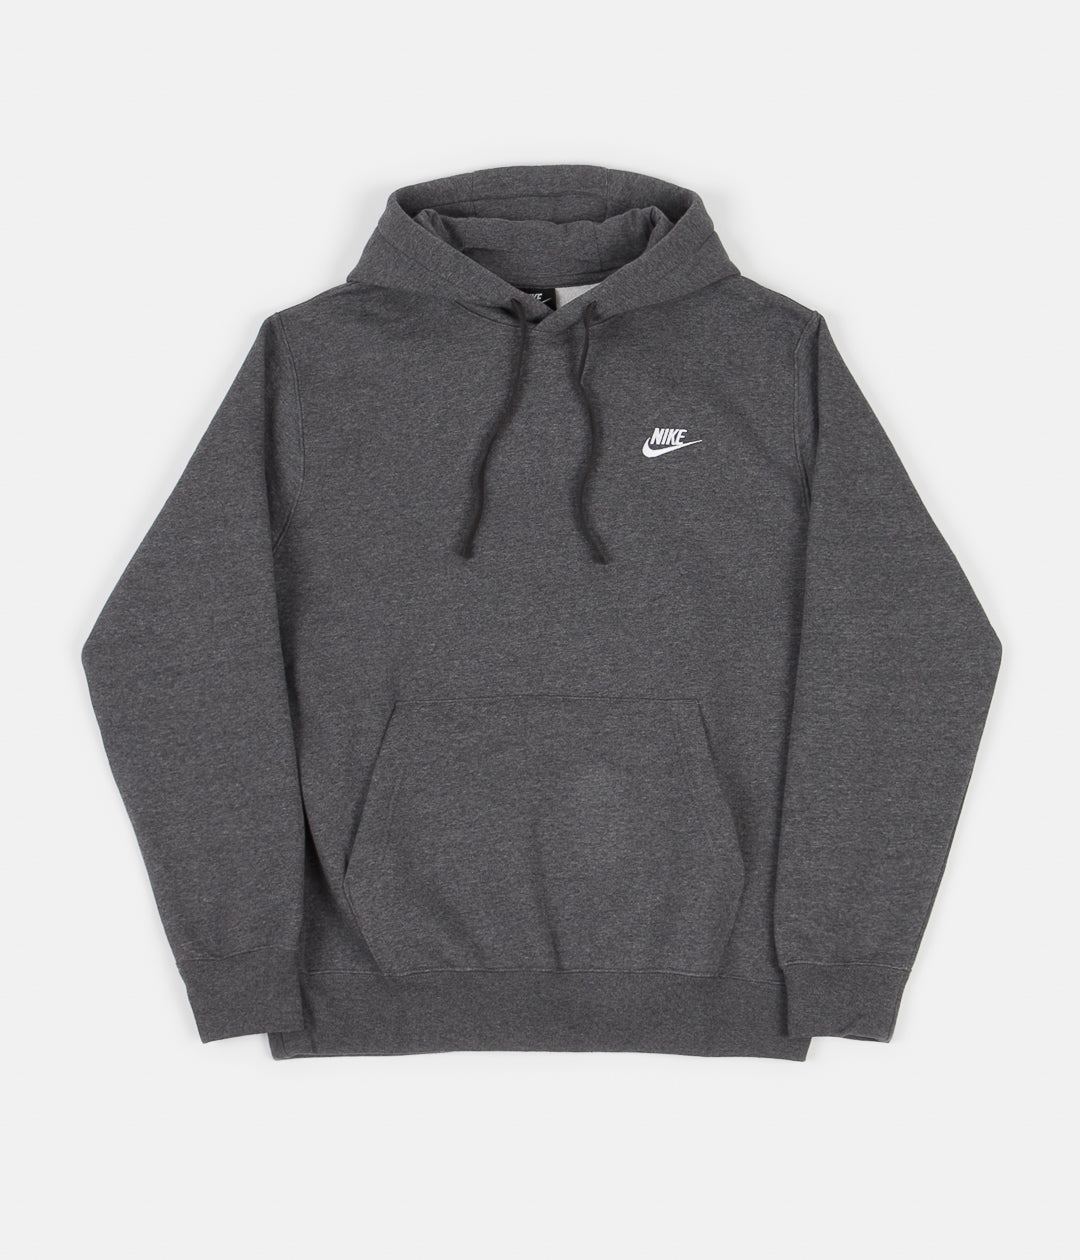 nike hoodie charcoal grey